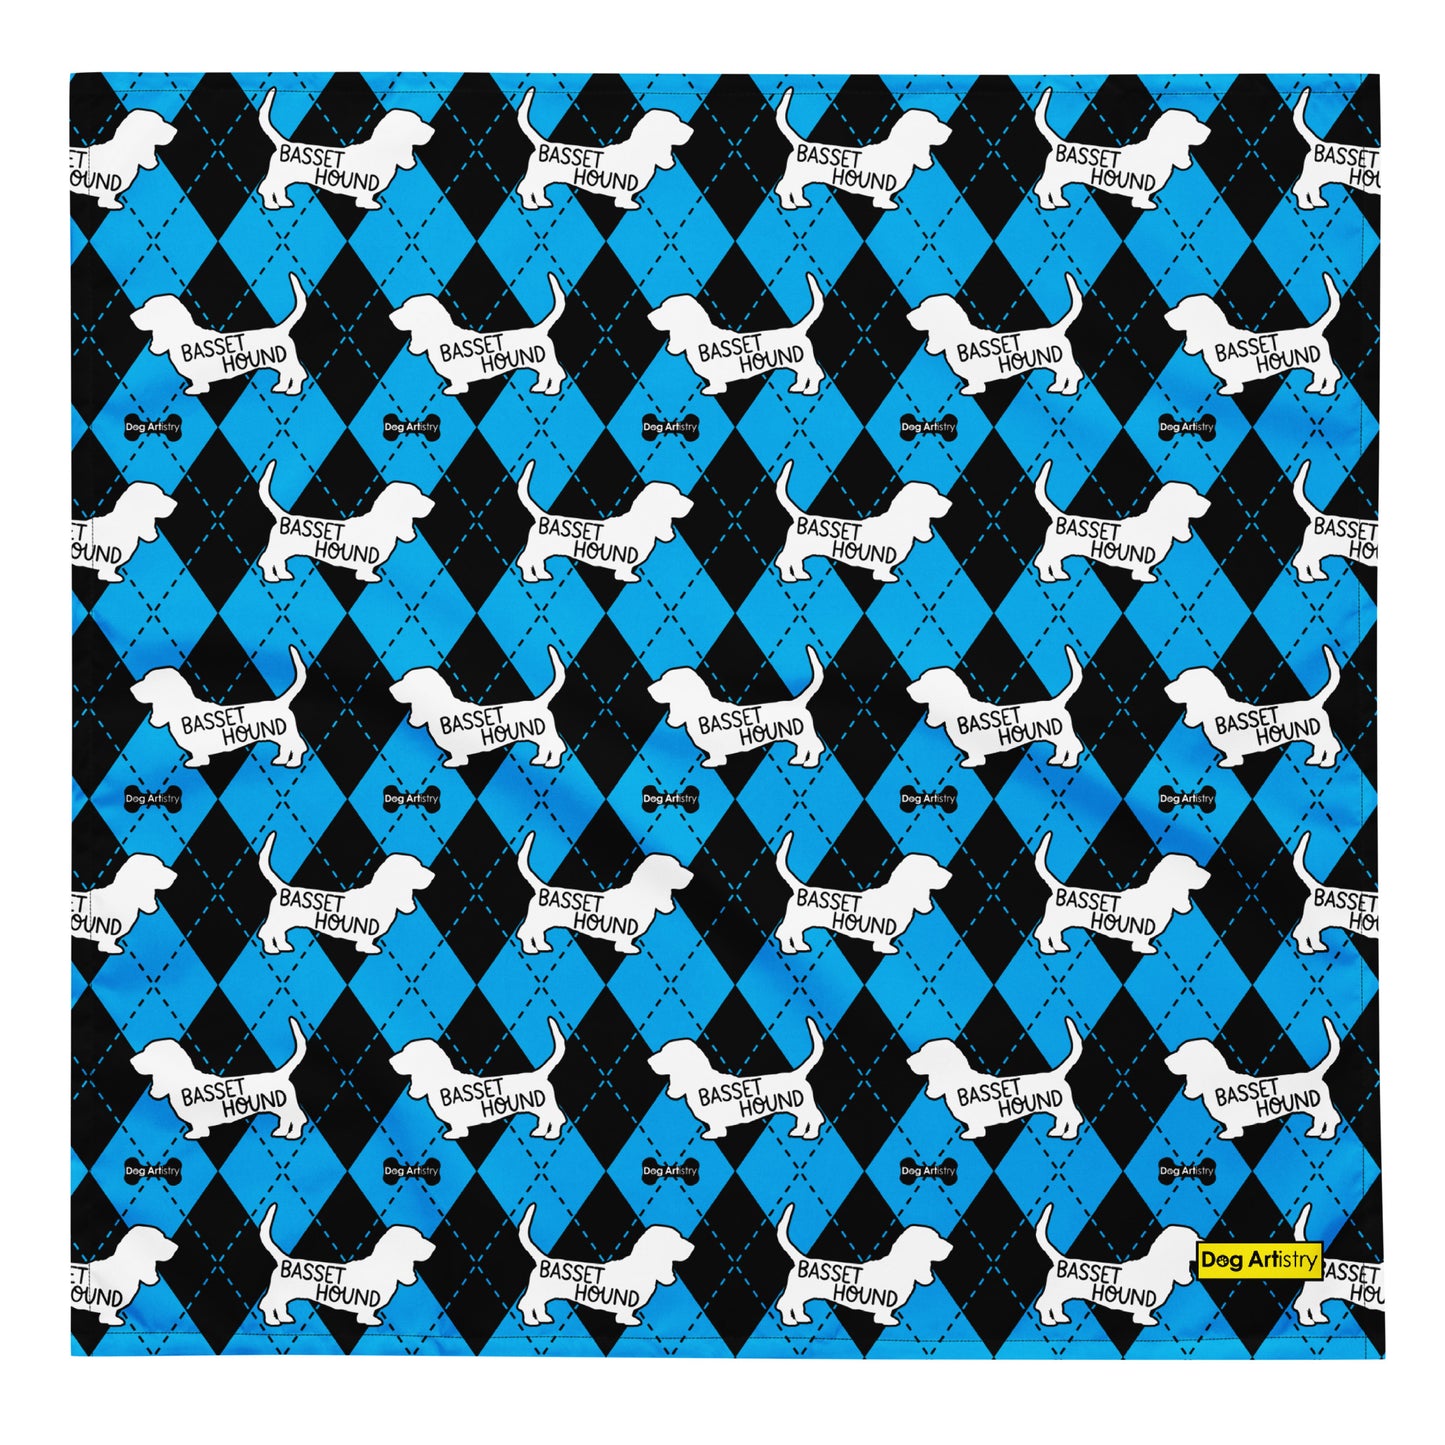 Basset Hound Argyle Blue and Black All-over print bandana